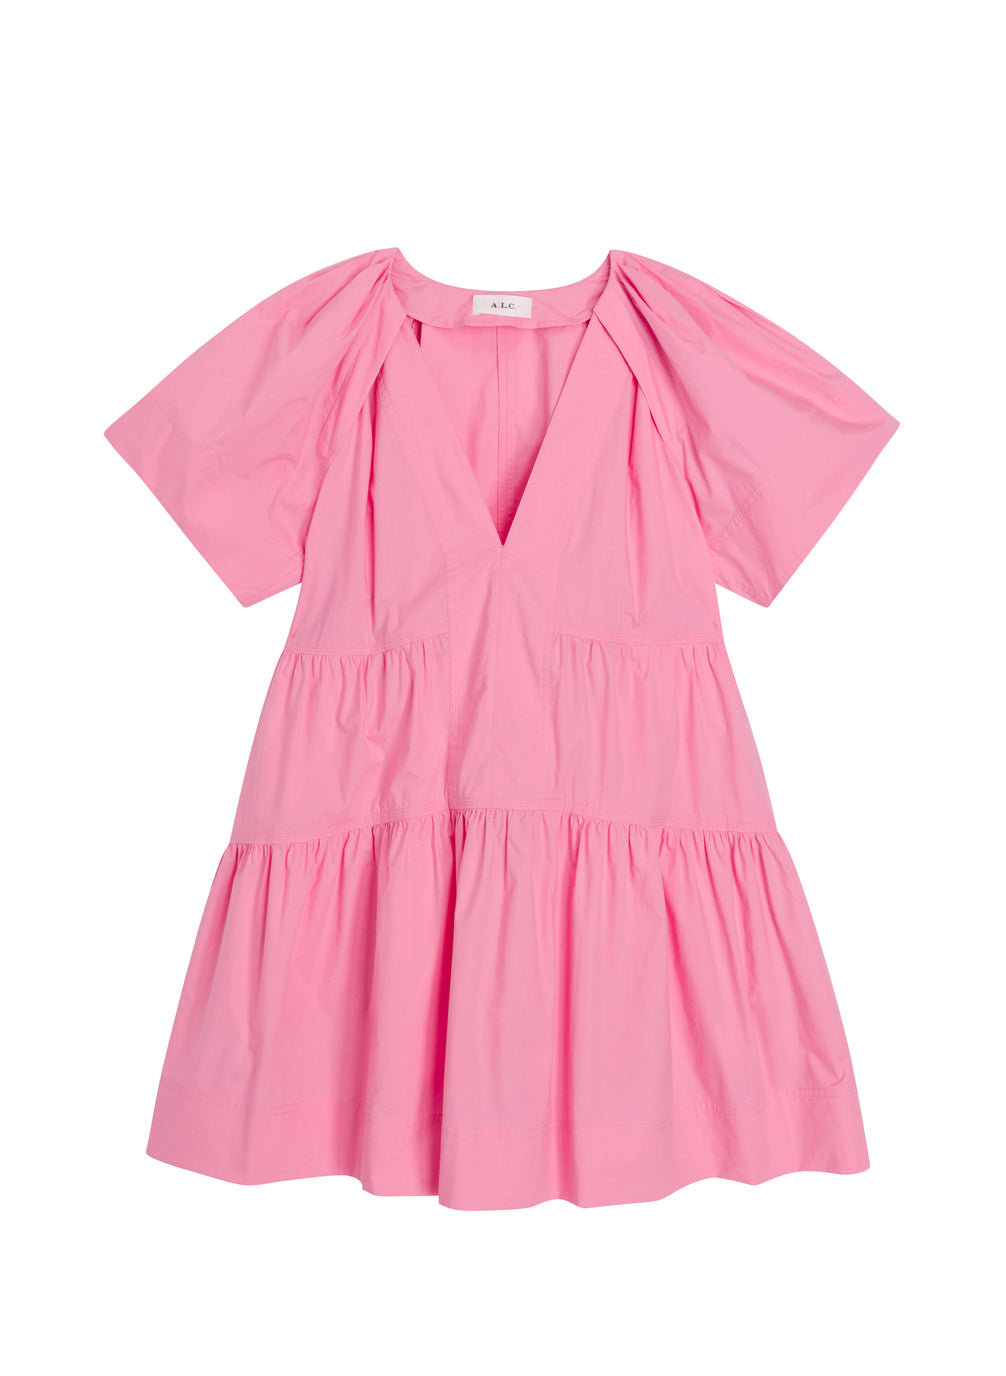 flatlay of pink short sleeve mini dress